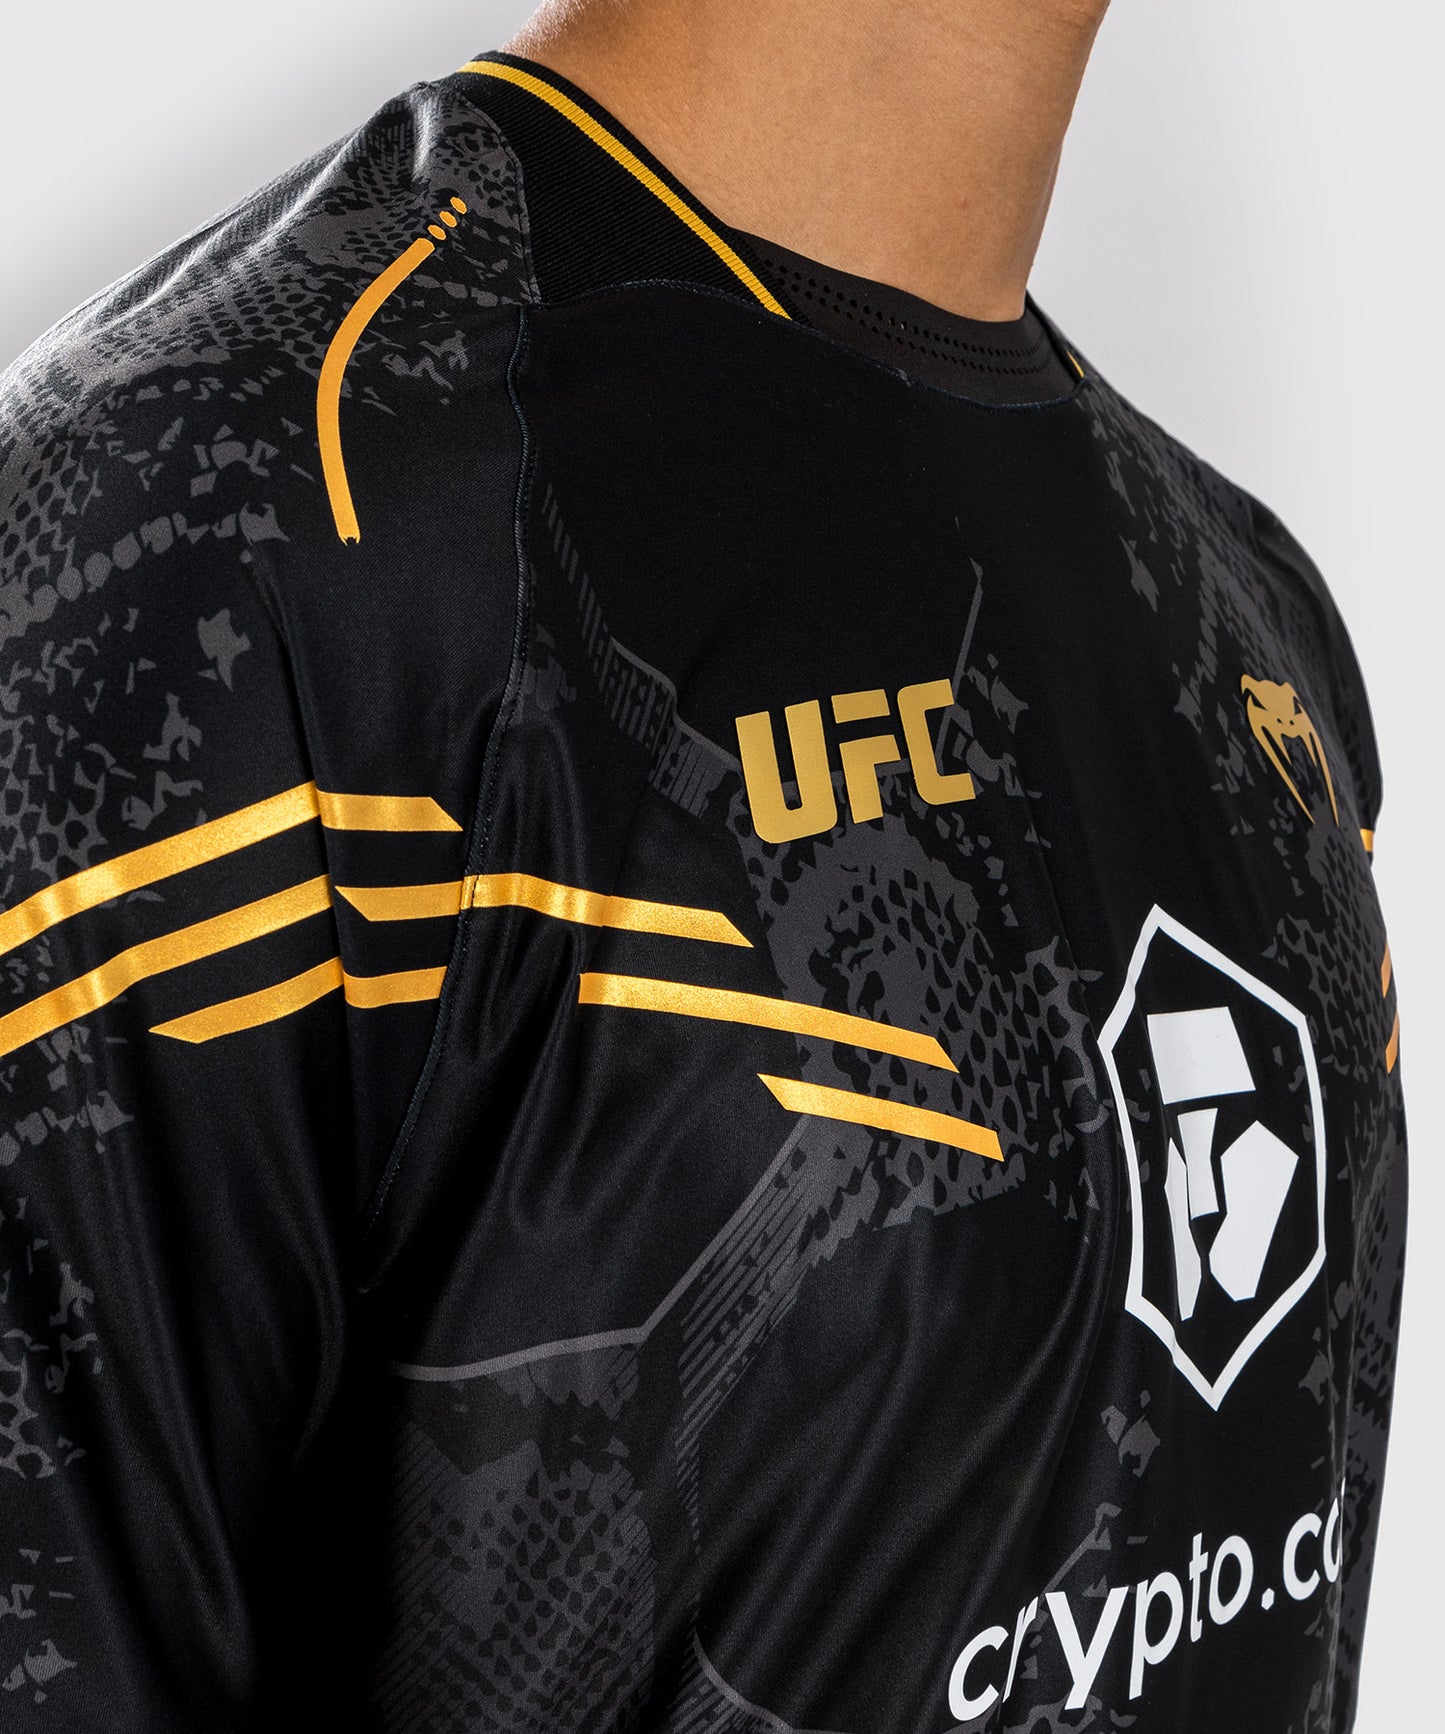 Camiseta UFC Fight Kit Decorated Black Hombre